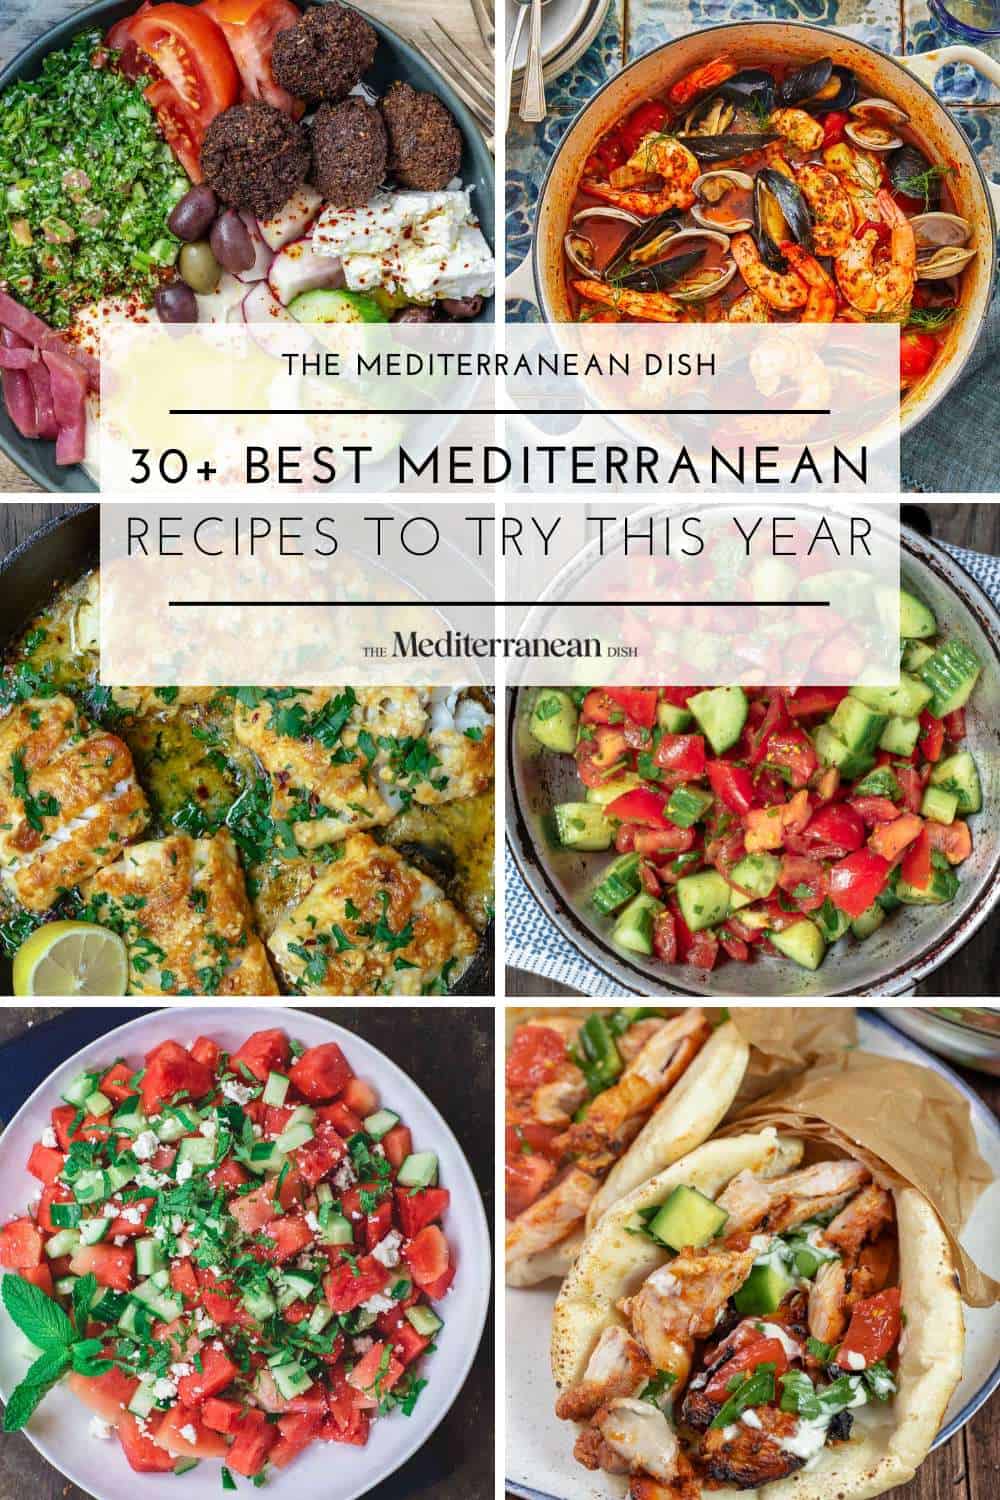 Mediterranean Diet and Mental Clarity